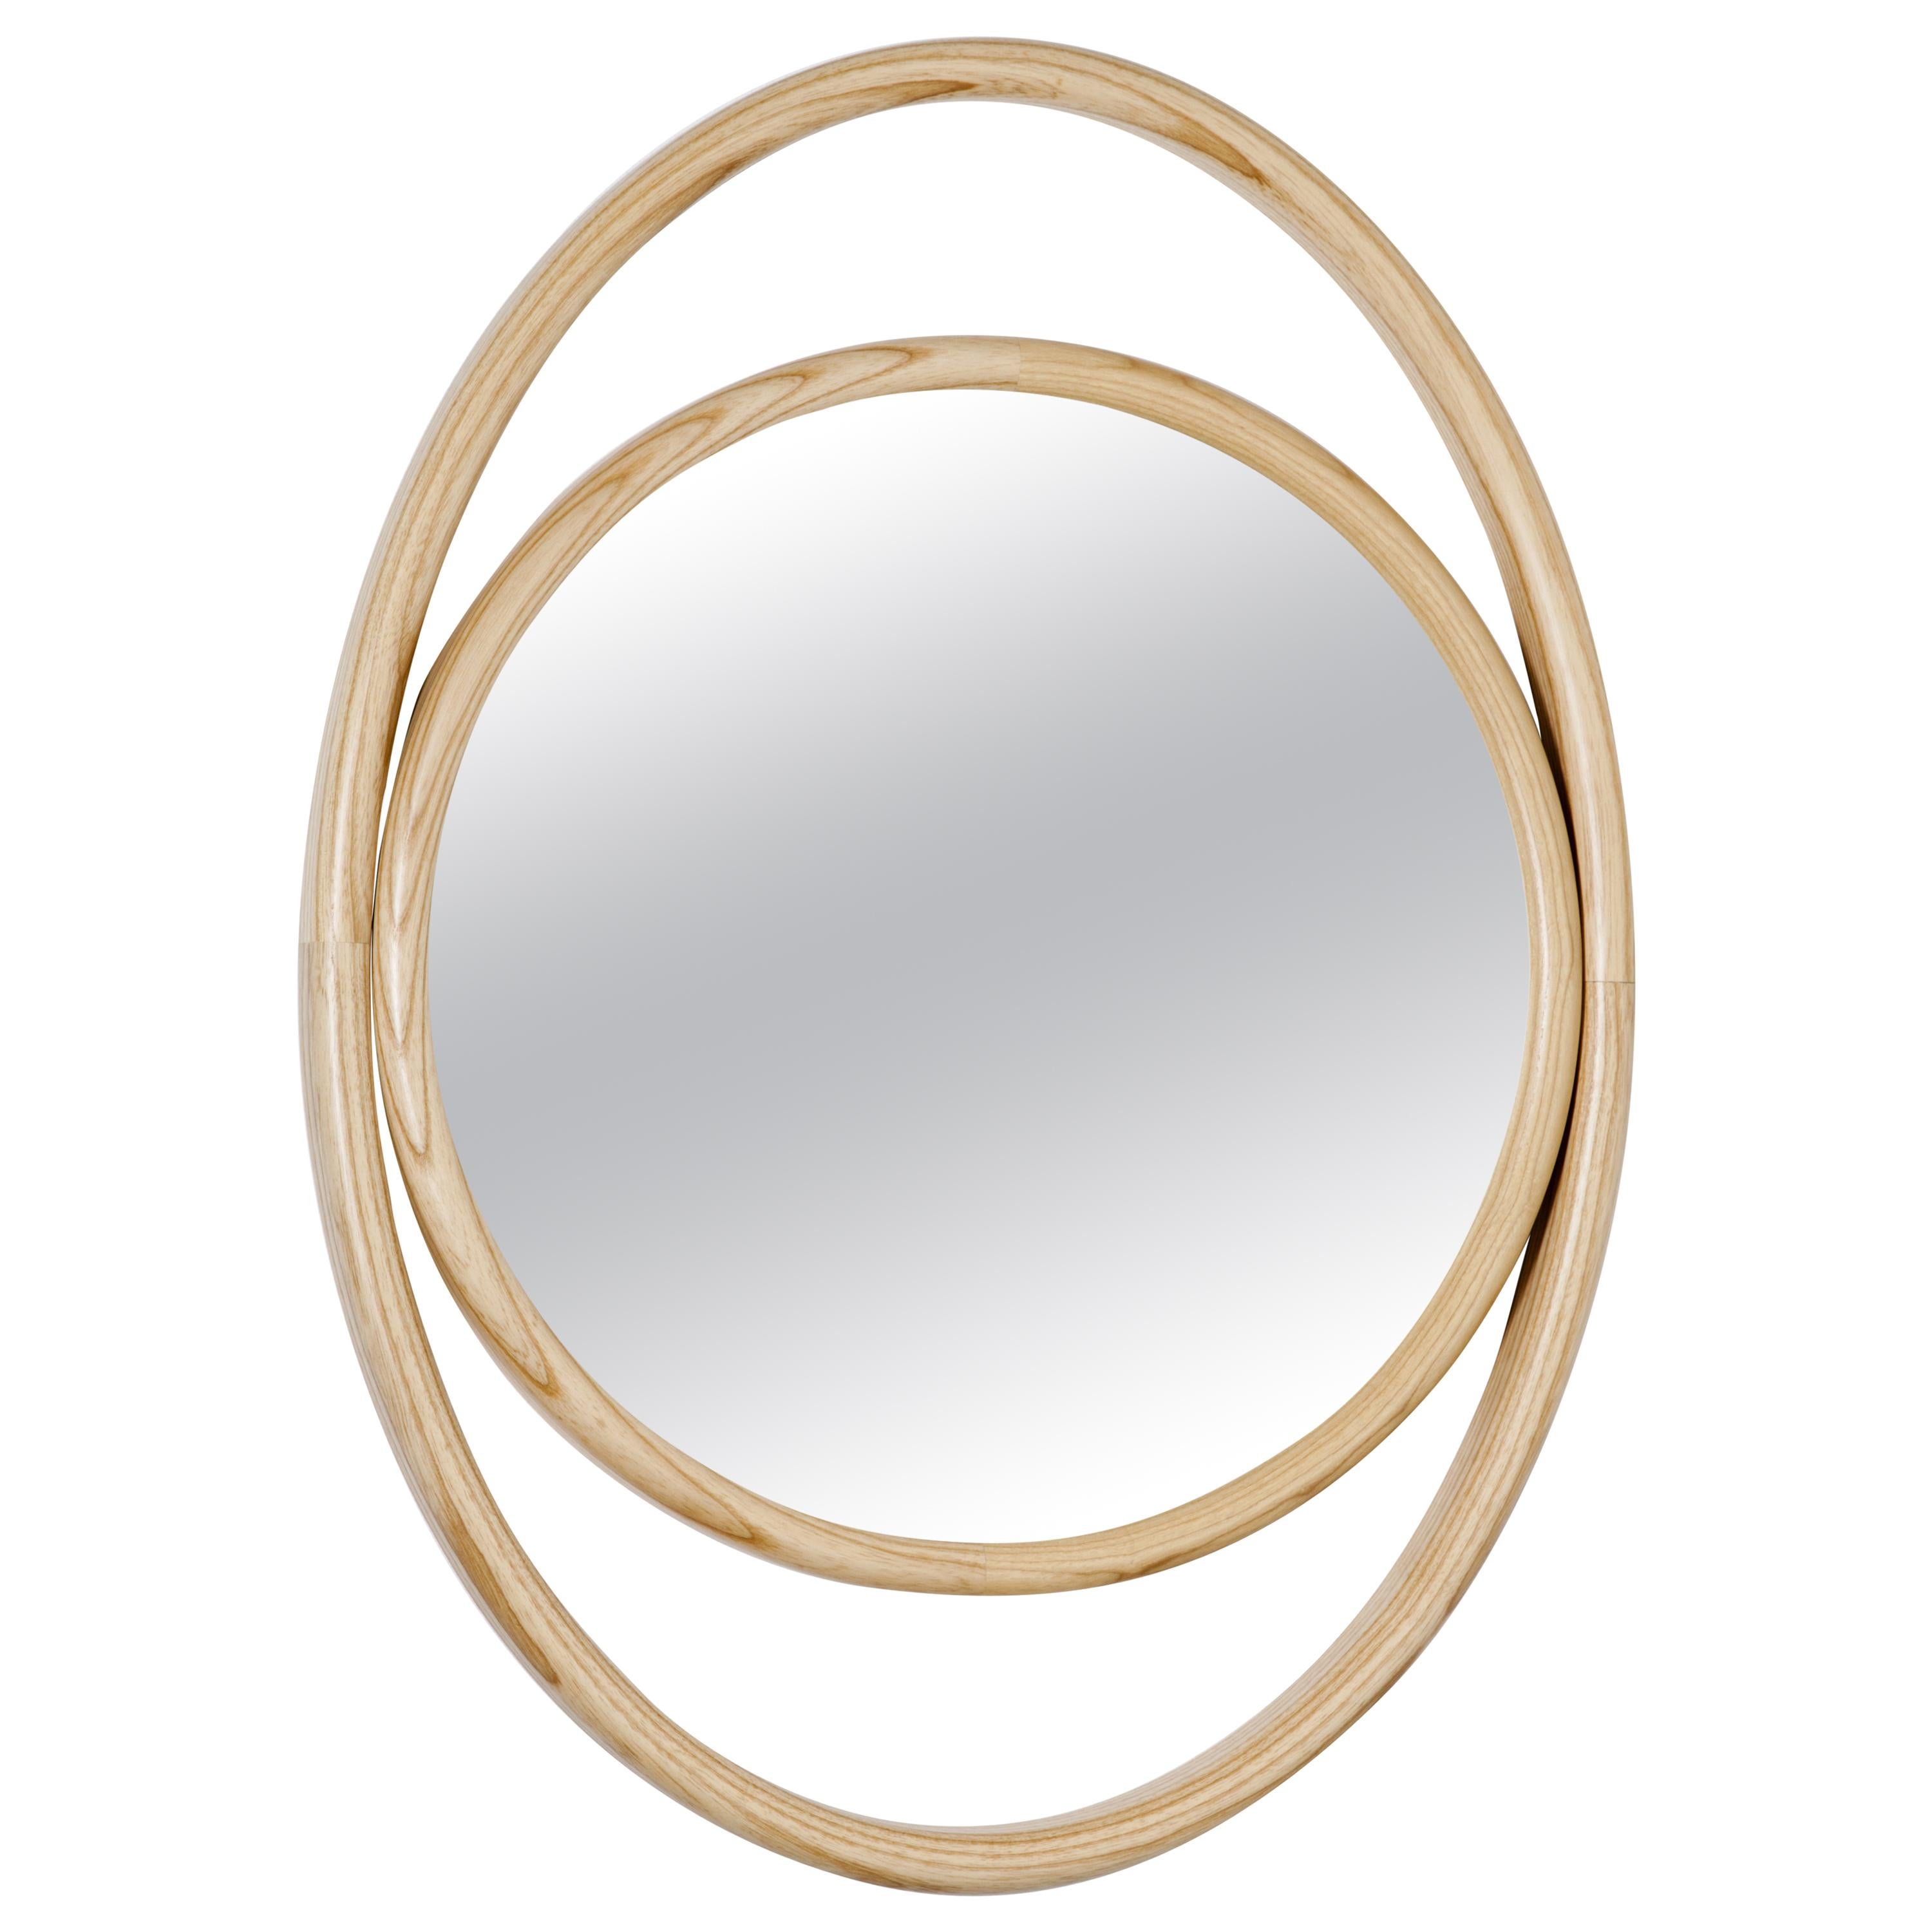 Gebrüder Thonet Vienna GmbH Eyeshine Large Oval Mirror with Ash Wood Frame